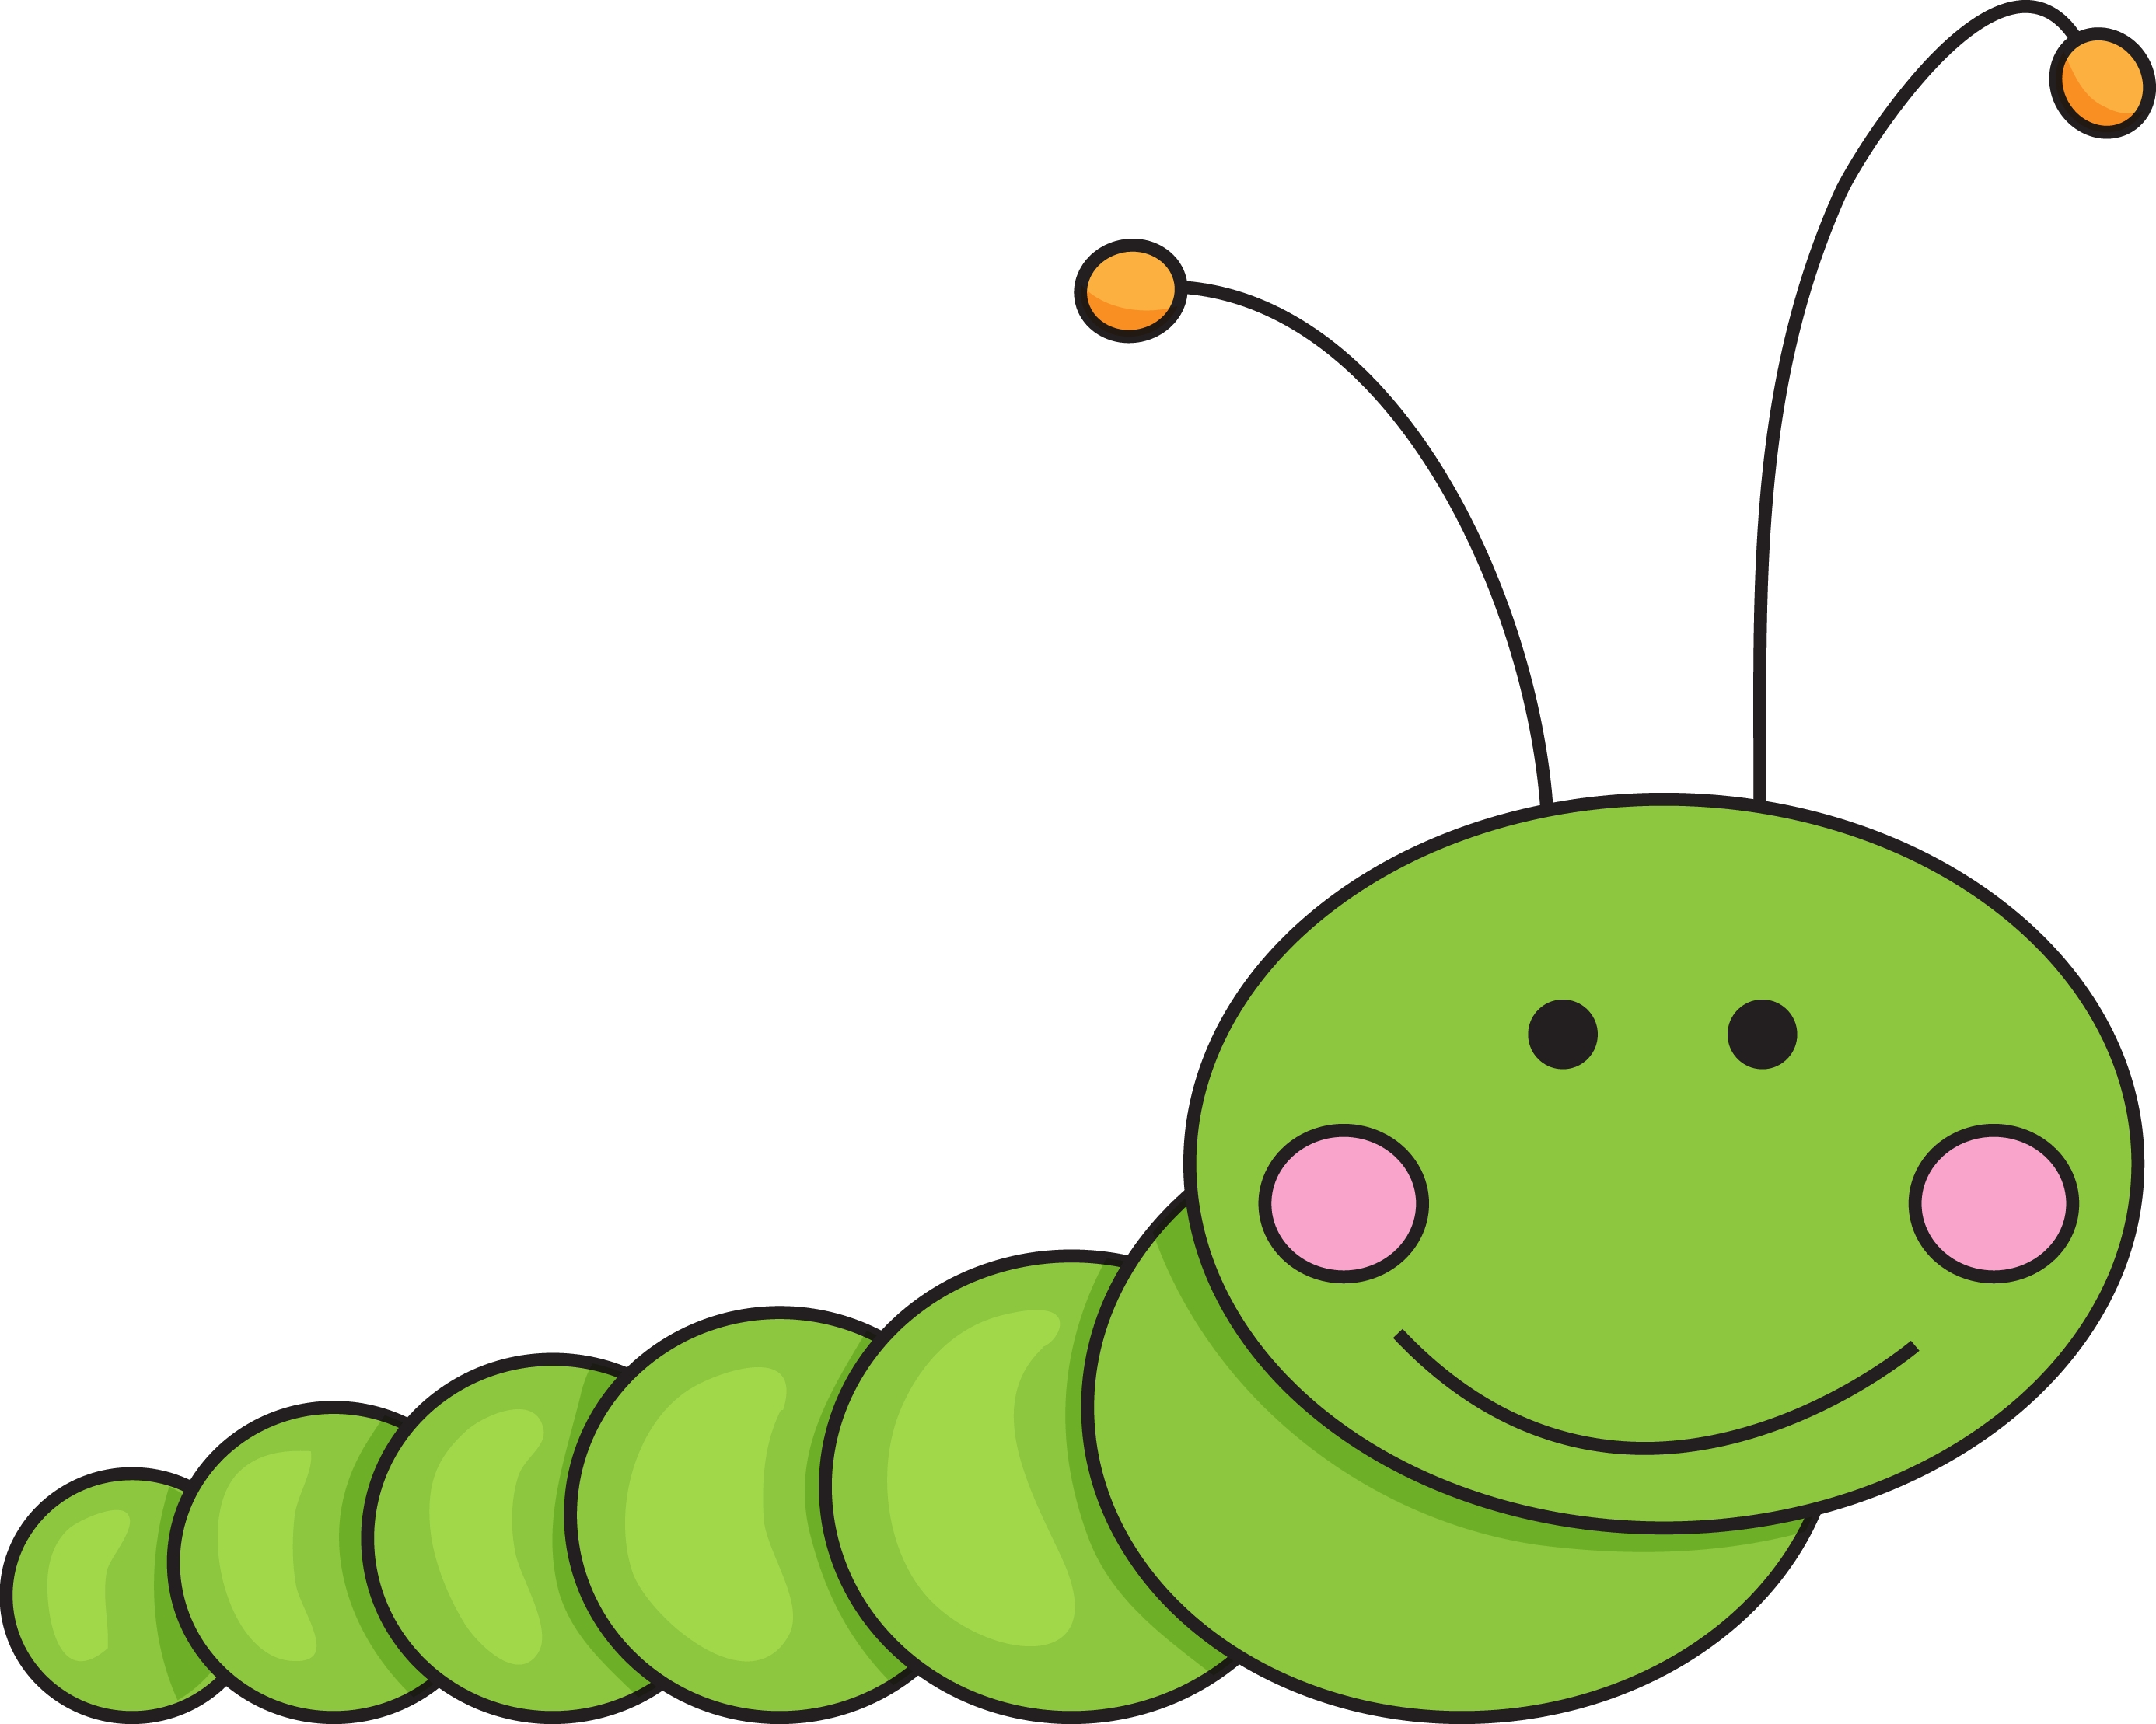 Caterpillar clipart cartoon.